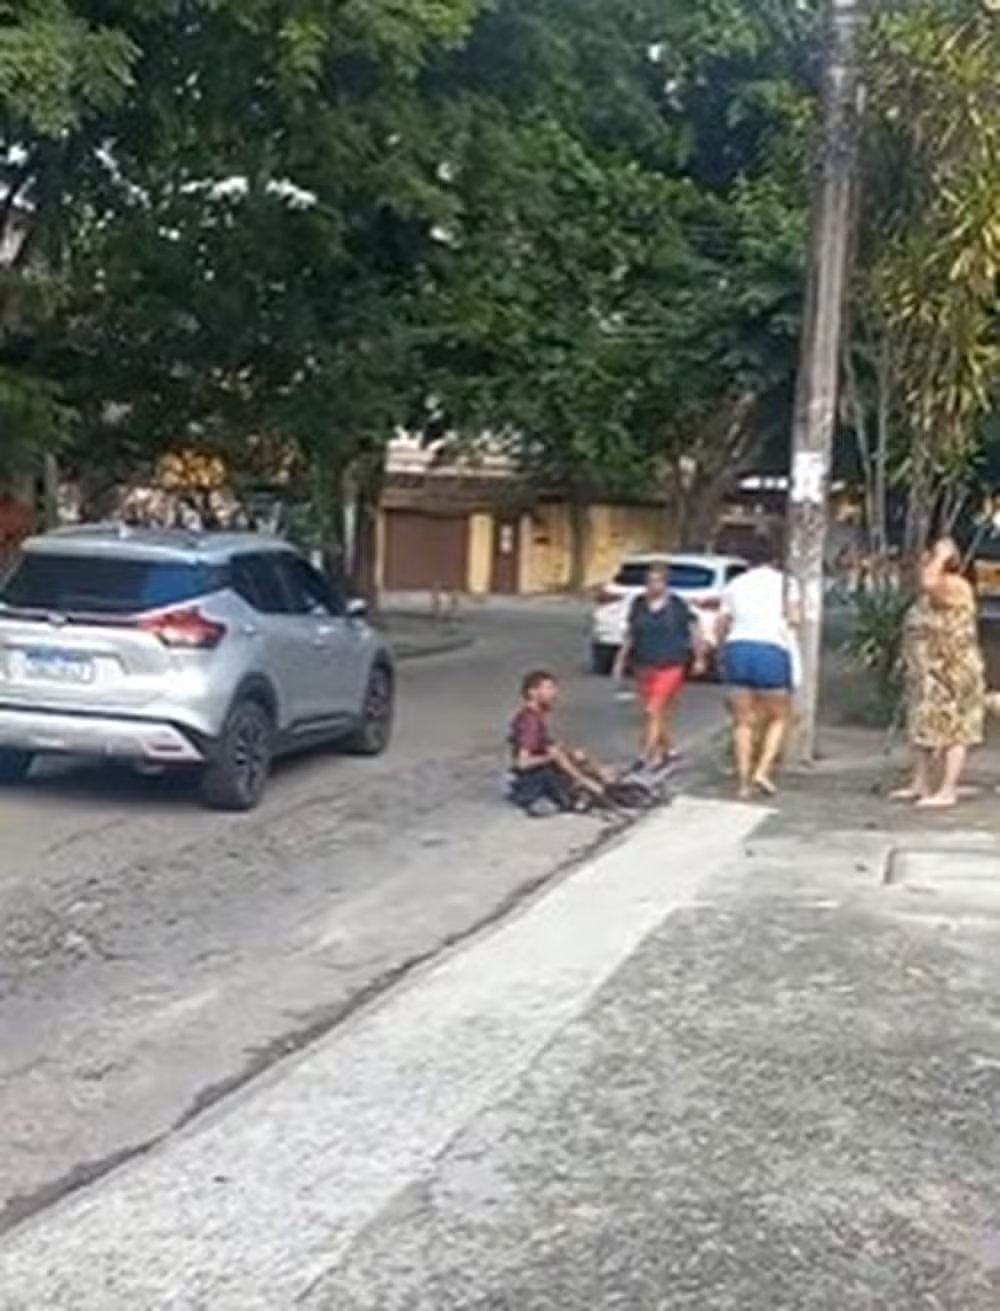 Cachorro baleado na Zona Oeste do Rio